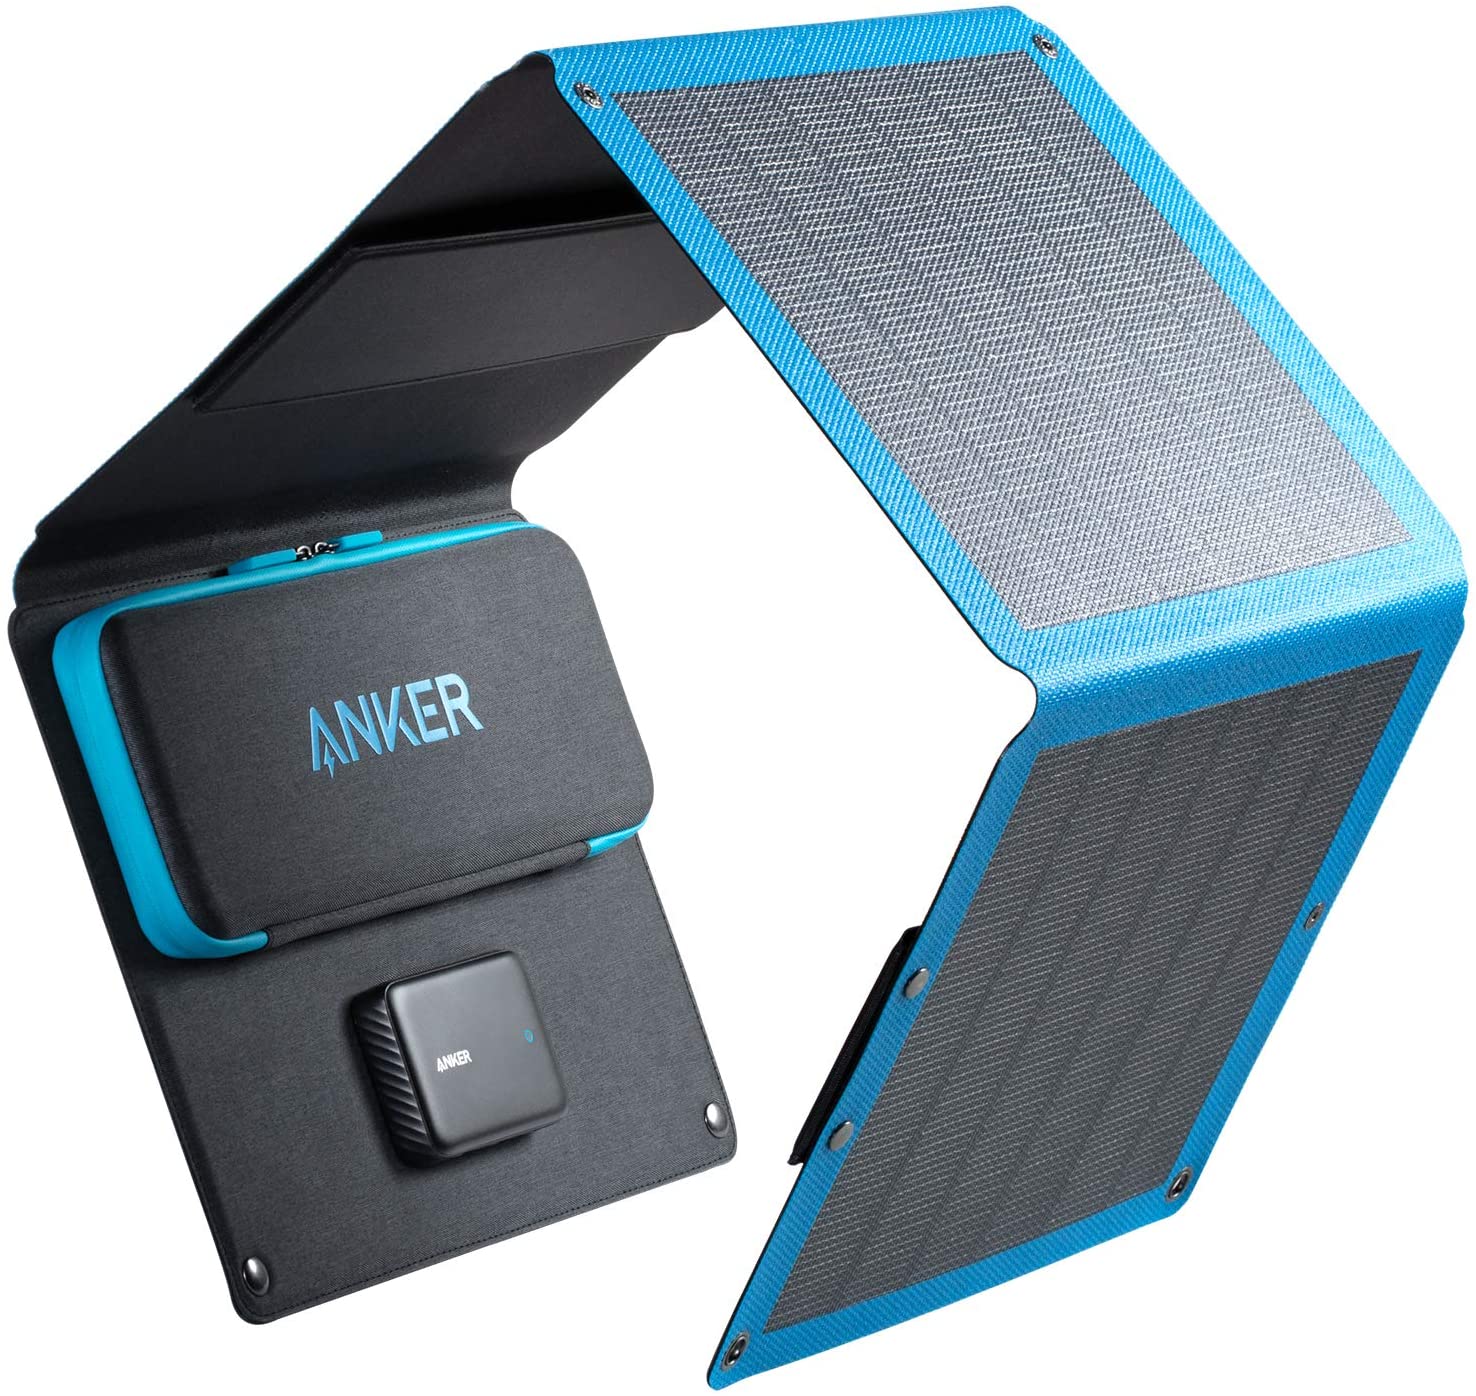 Anker PowerSolar Flex 3-Port 24W (3ポート USBソーラーチャージャー) キャンプ アウトドア iPhone iPad Galaxy Android 各種対応